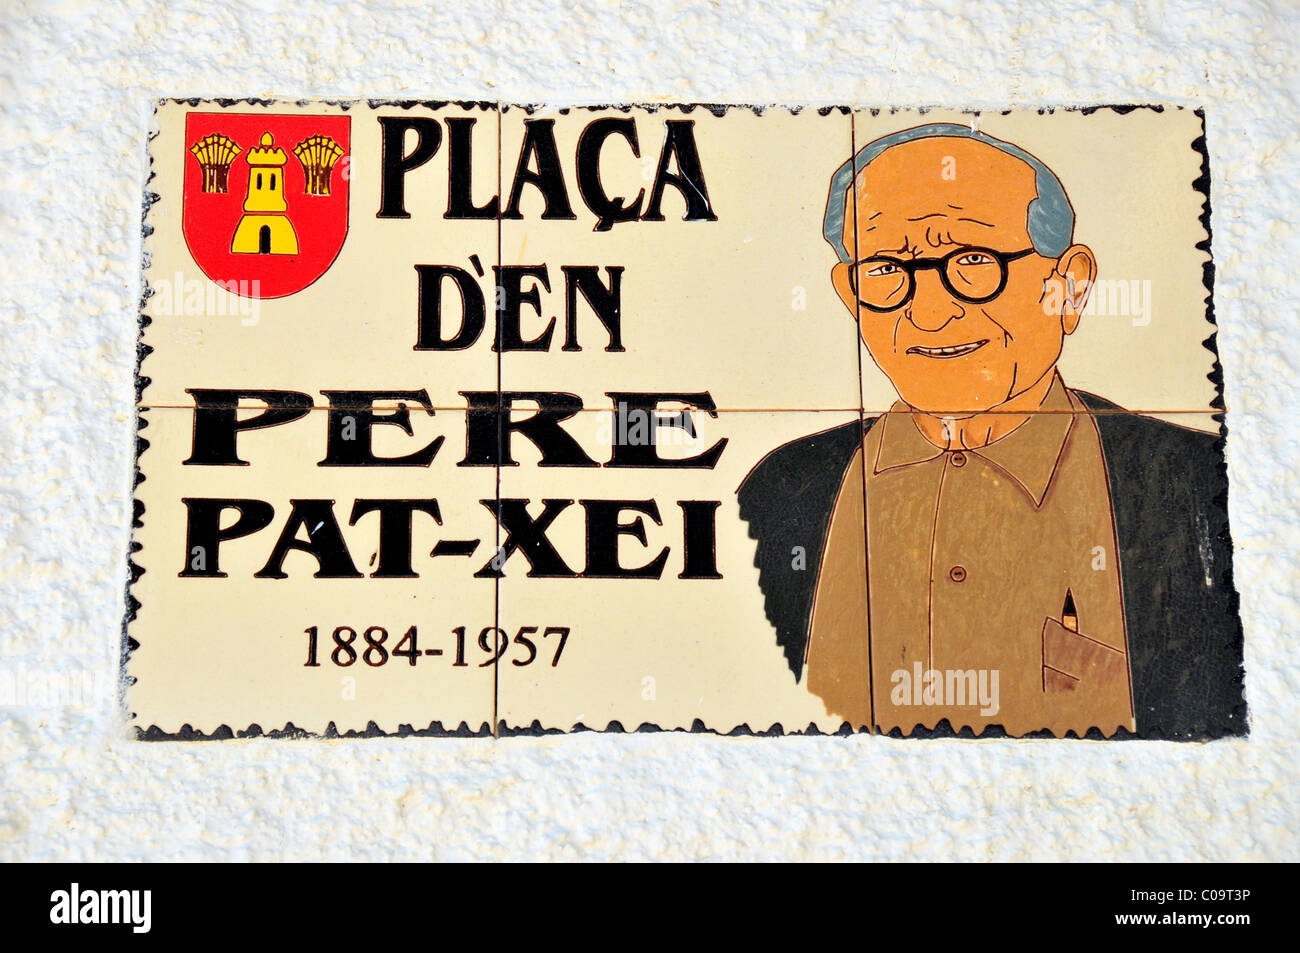 Placa Pere the Pat-Xei, Father Pat-Xei Square, Tamariu, Costa Brava, Spain, Iberian Peninsula, Europe Stock Photo